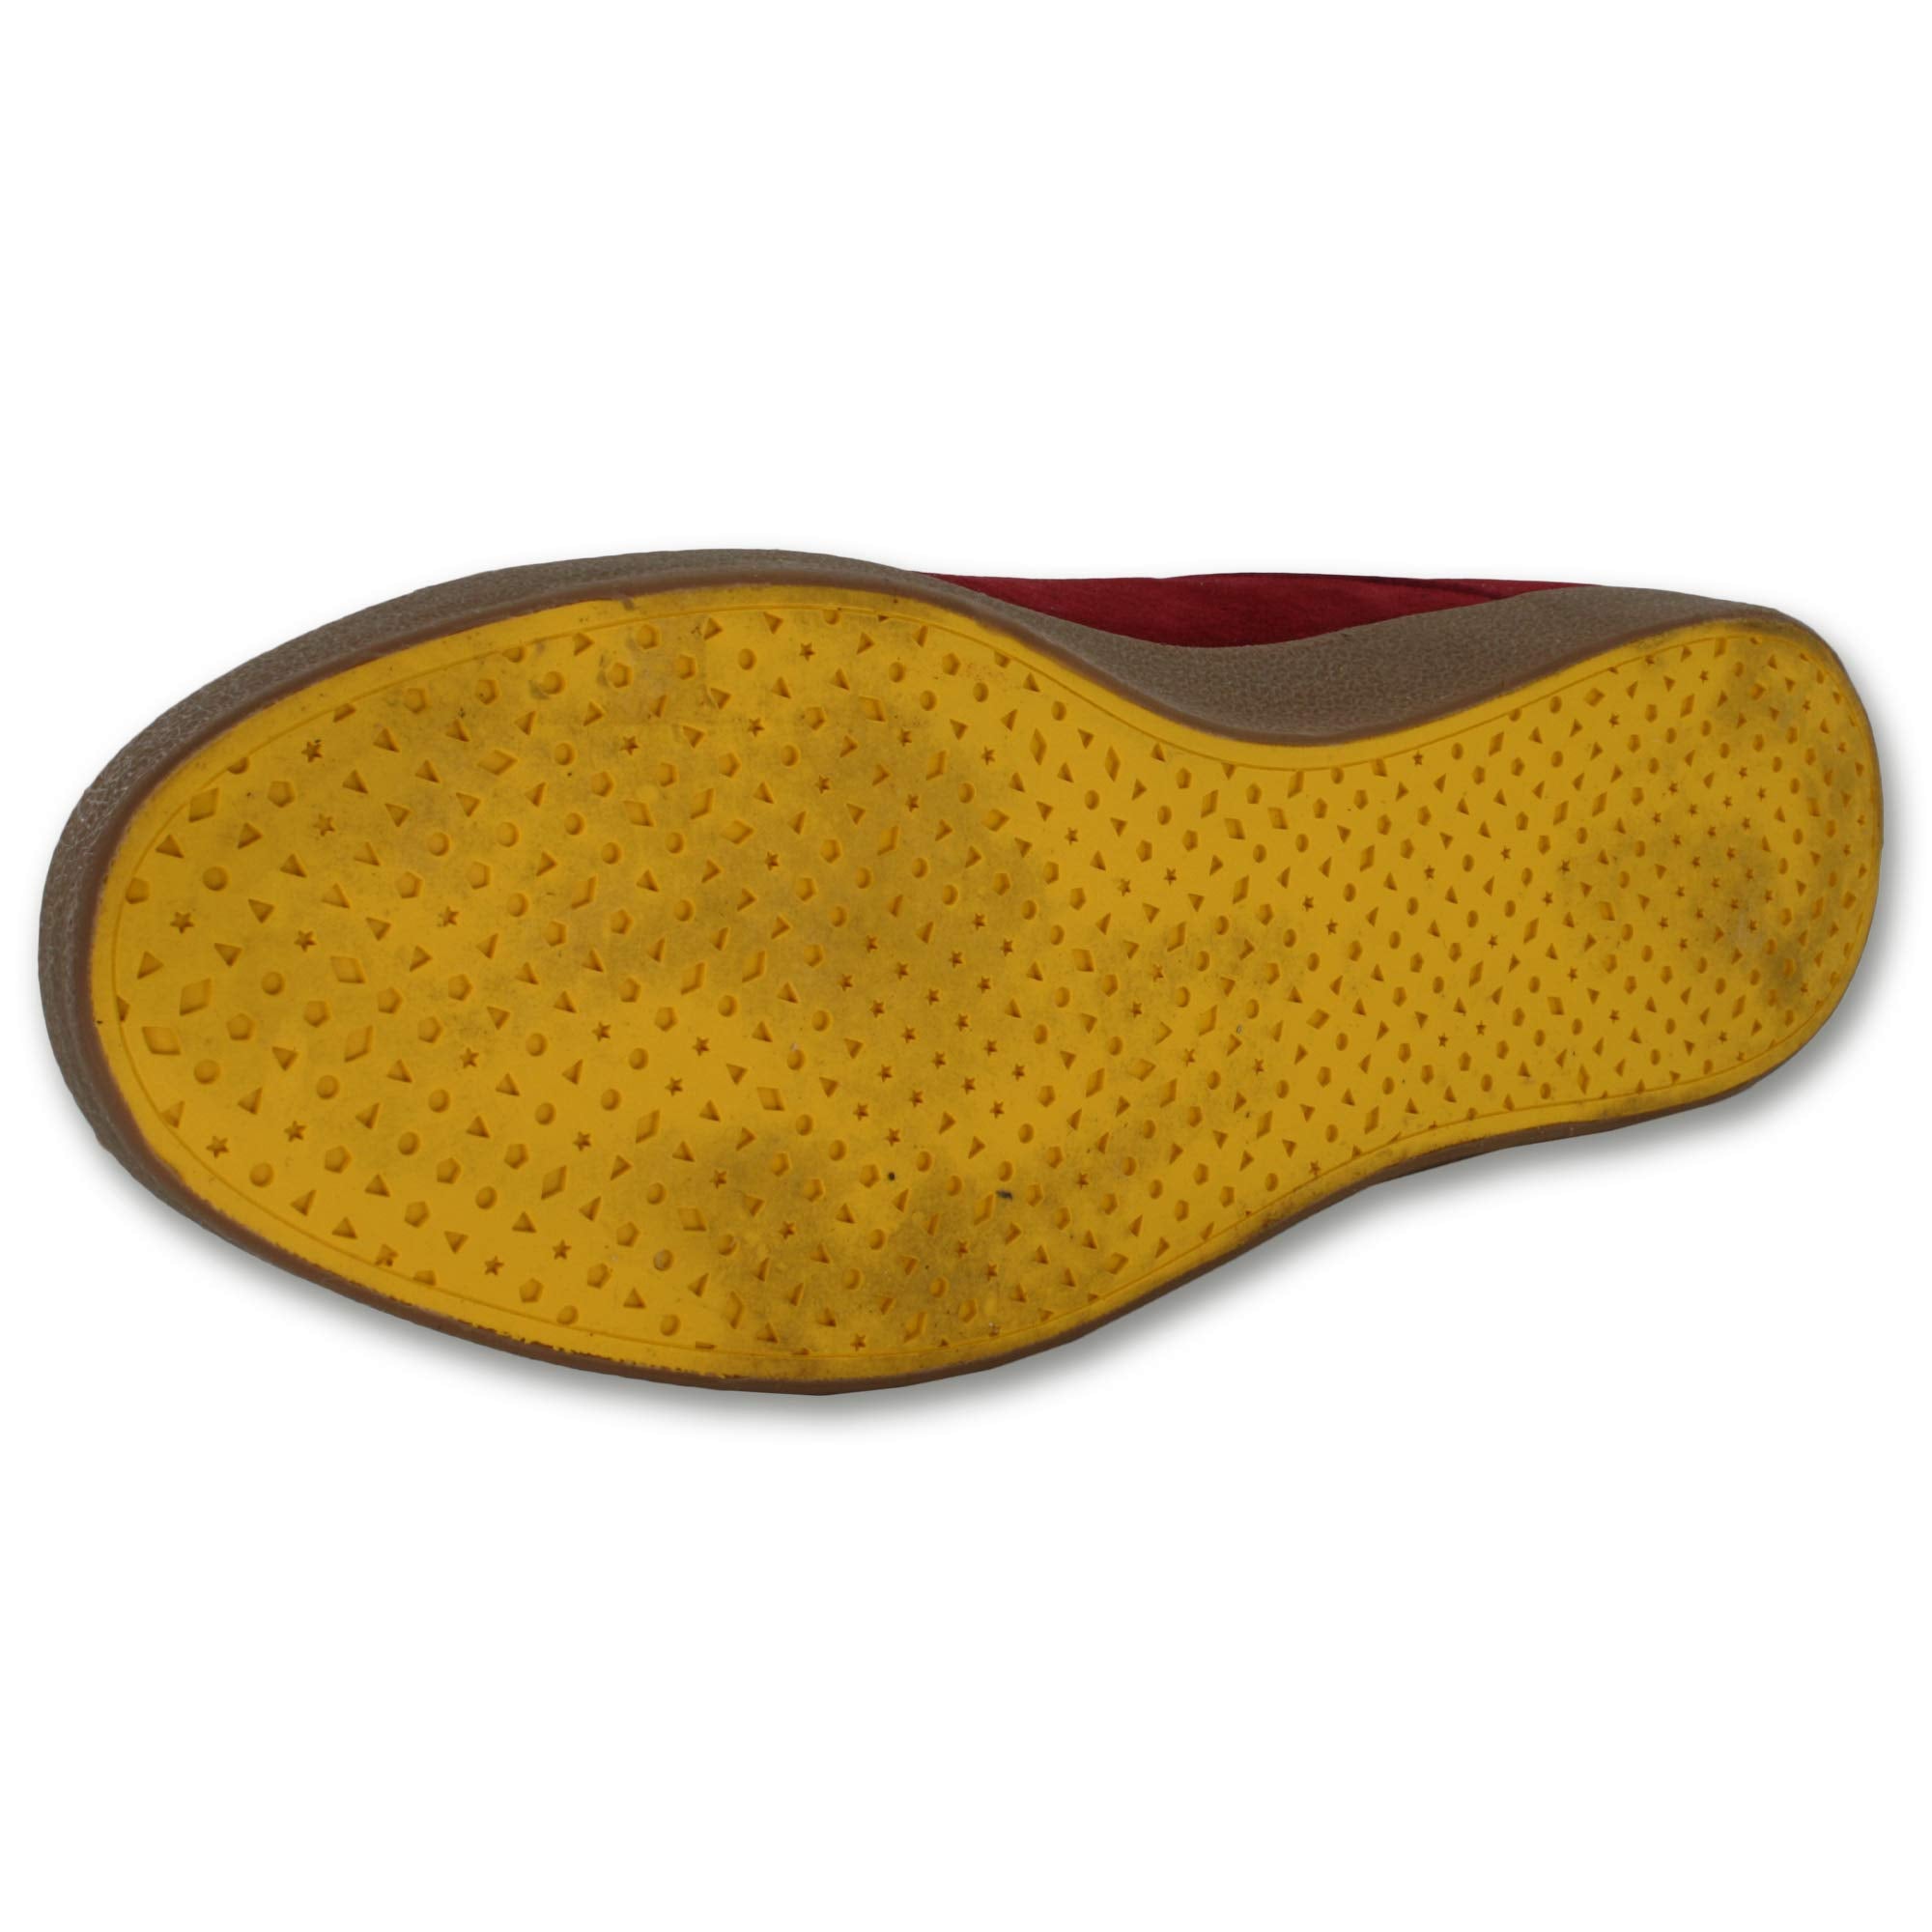 Pele Sports Men's Azteca Suede Soccer Shoe - Rio Red/Vintage Gum/Spectra Yellow